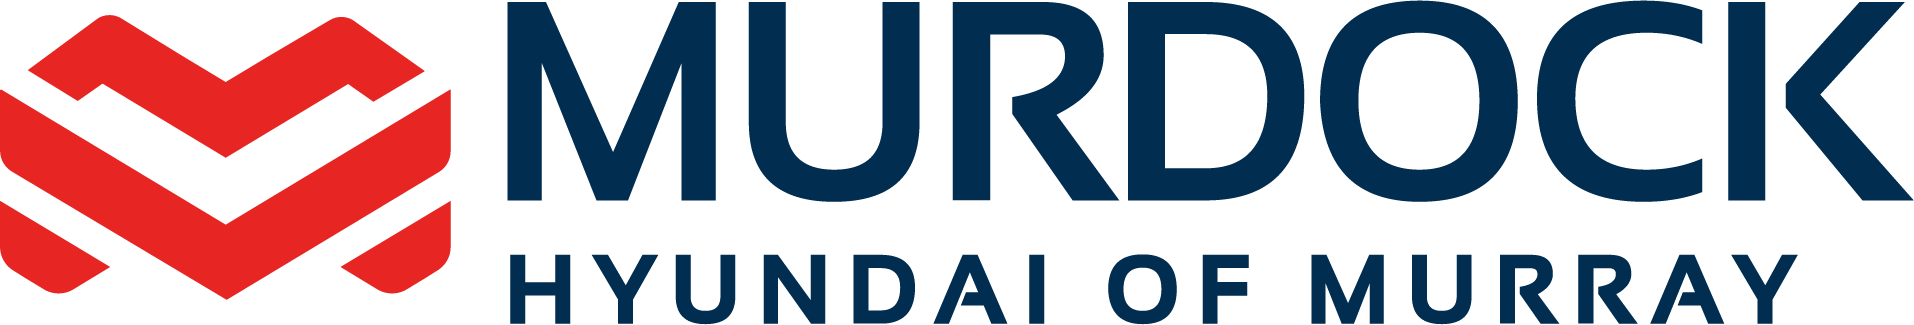 Murdock Hyundai Logo